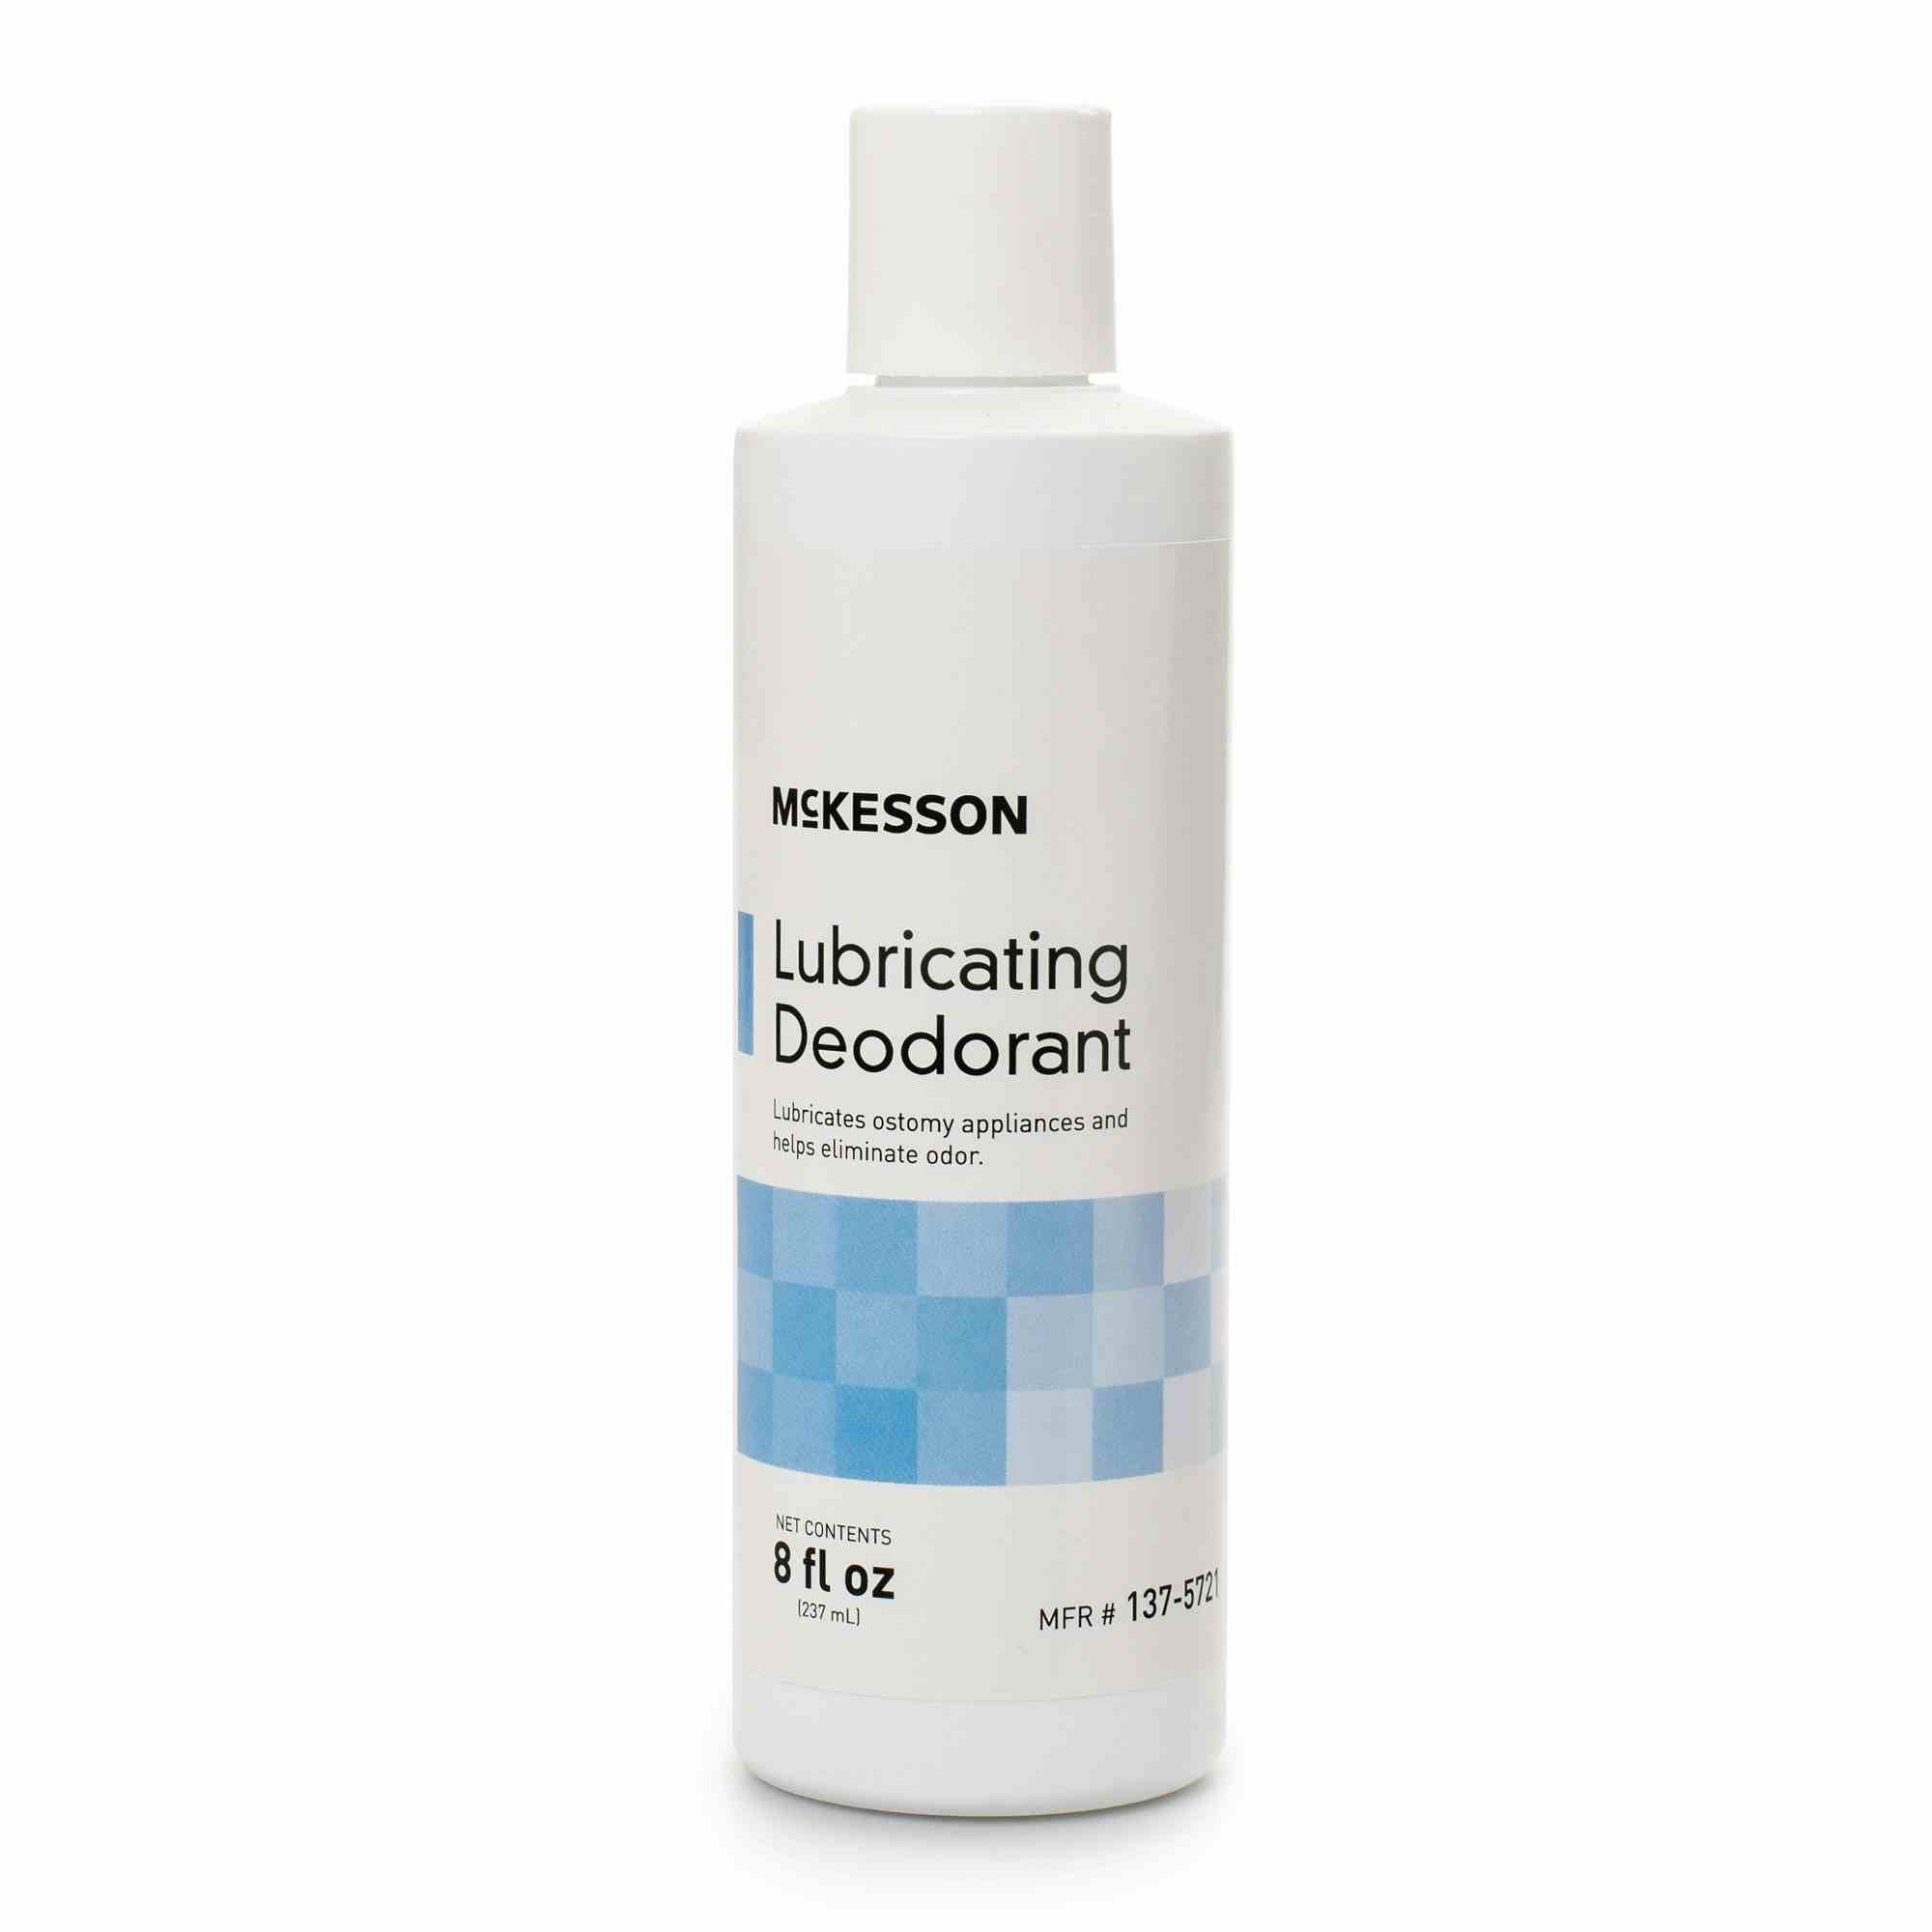 McKesson Lubricating Deodorant Bottle, 8 oz., 137-5721, 1 Each